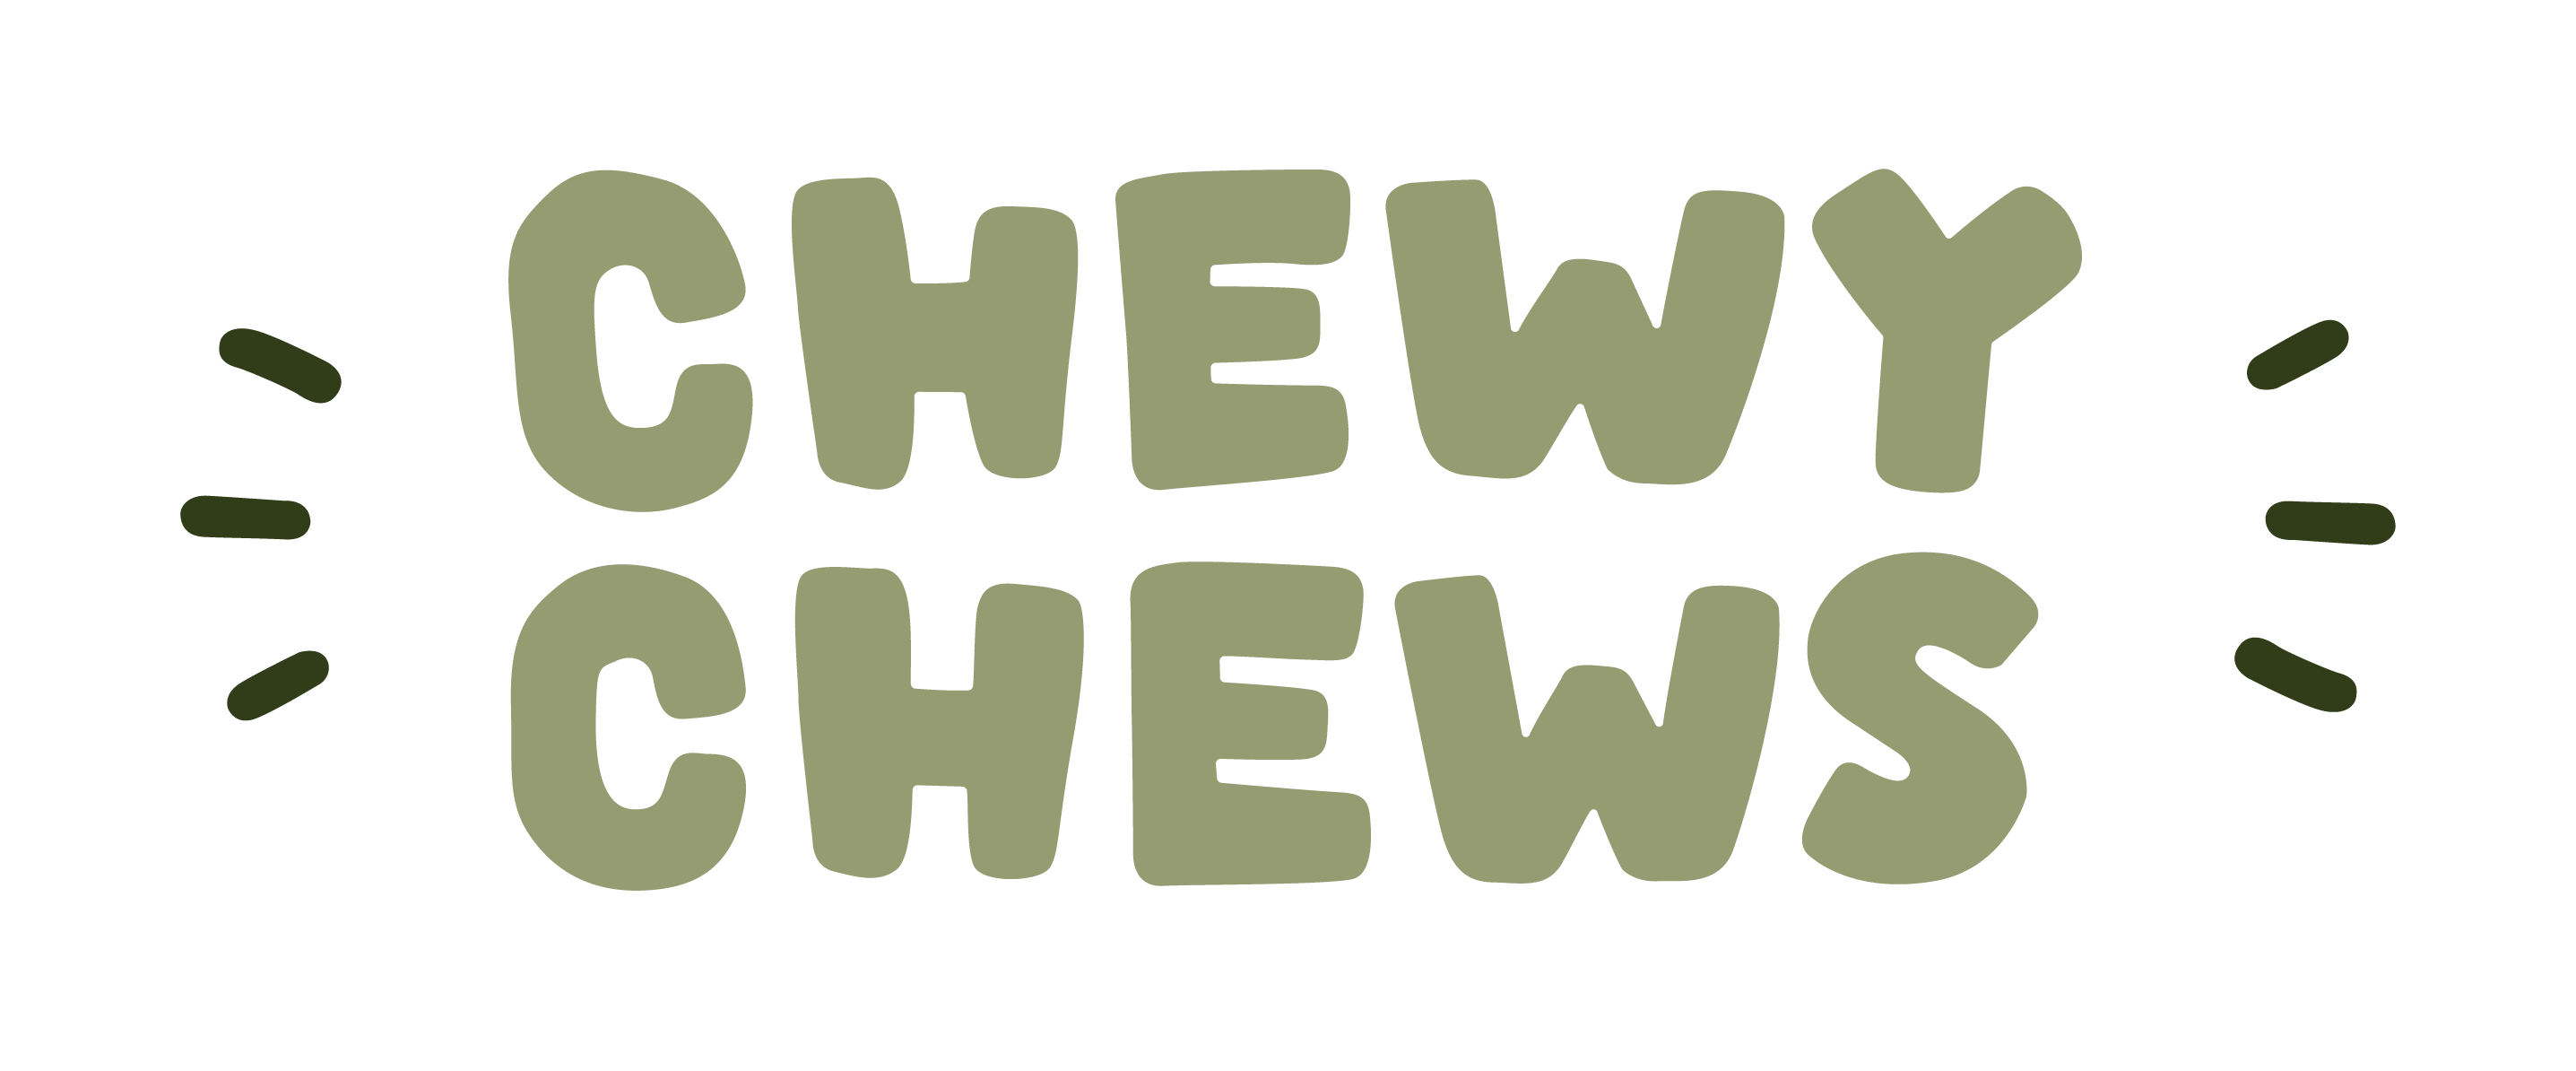 CHEWY CHEWS - LOGO'S - GREEN-11